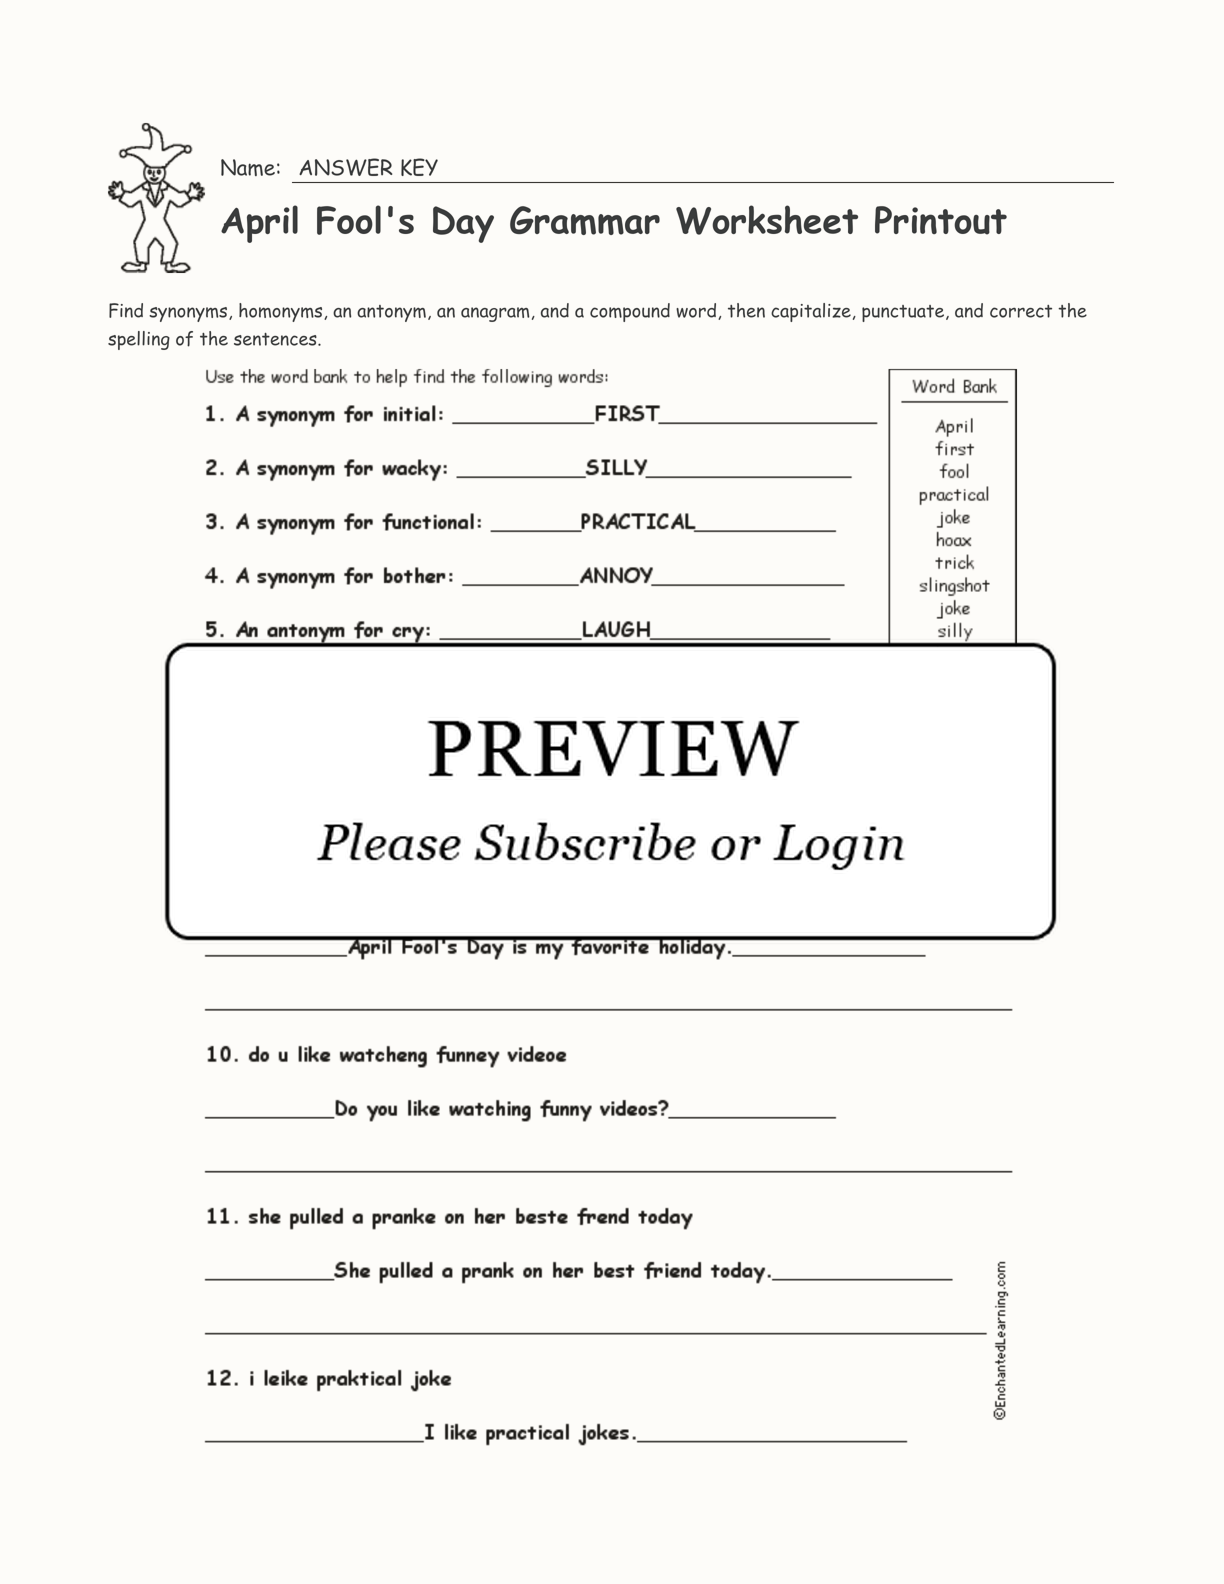 April Fool's Day Grammar Worksheet Printout interactive worksheet page 2